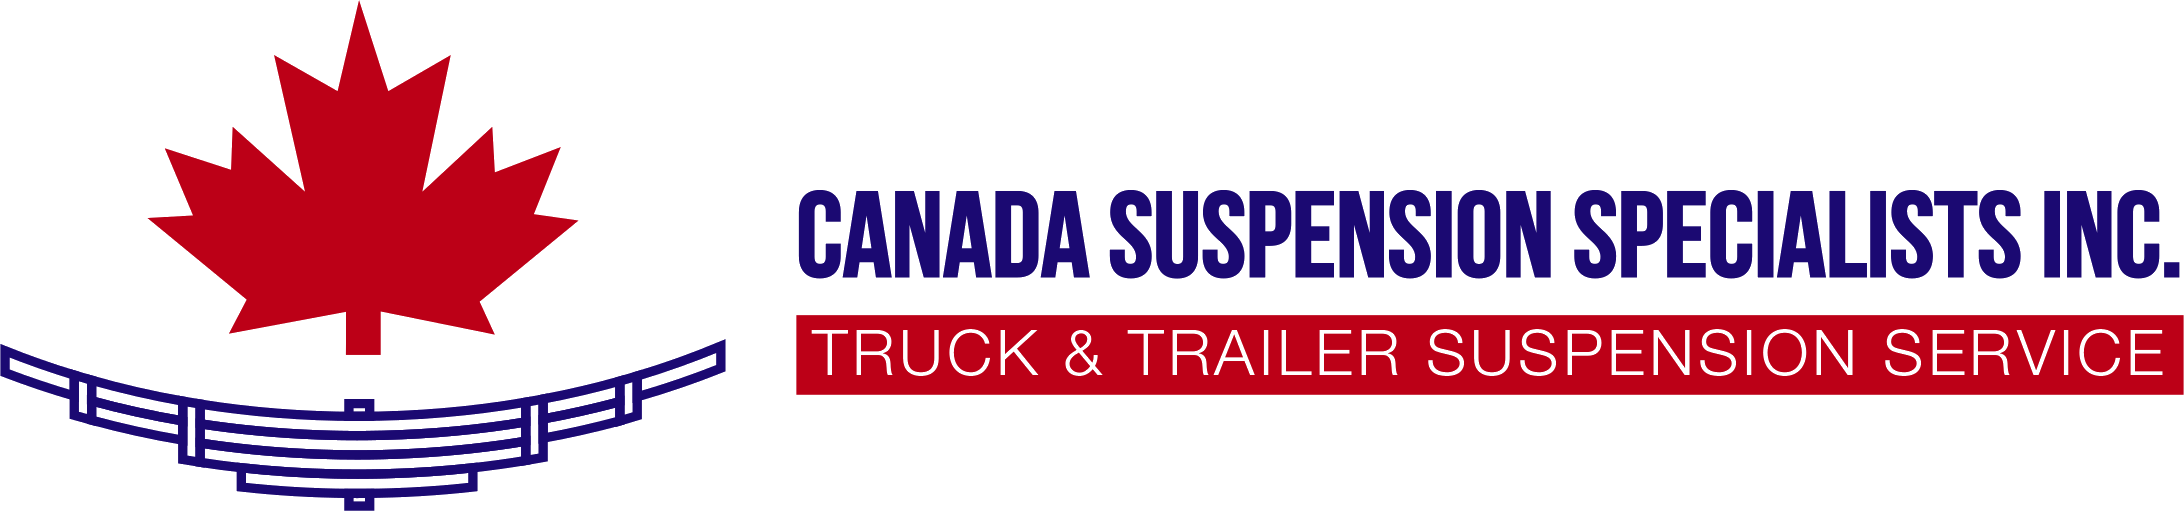 Canada Suspension Specialists Inc.